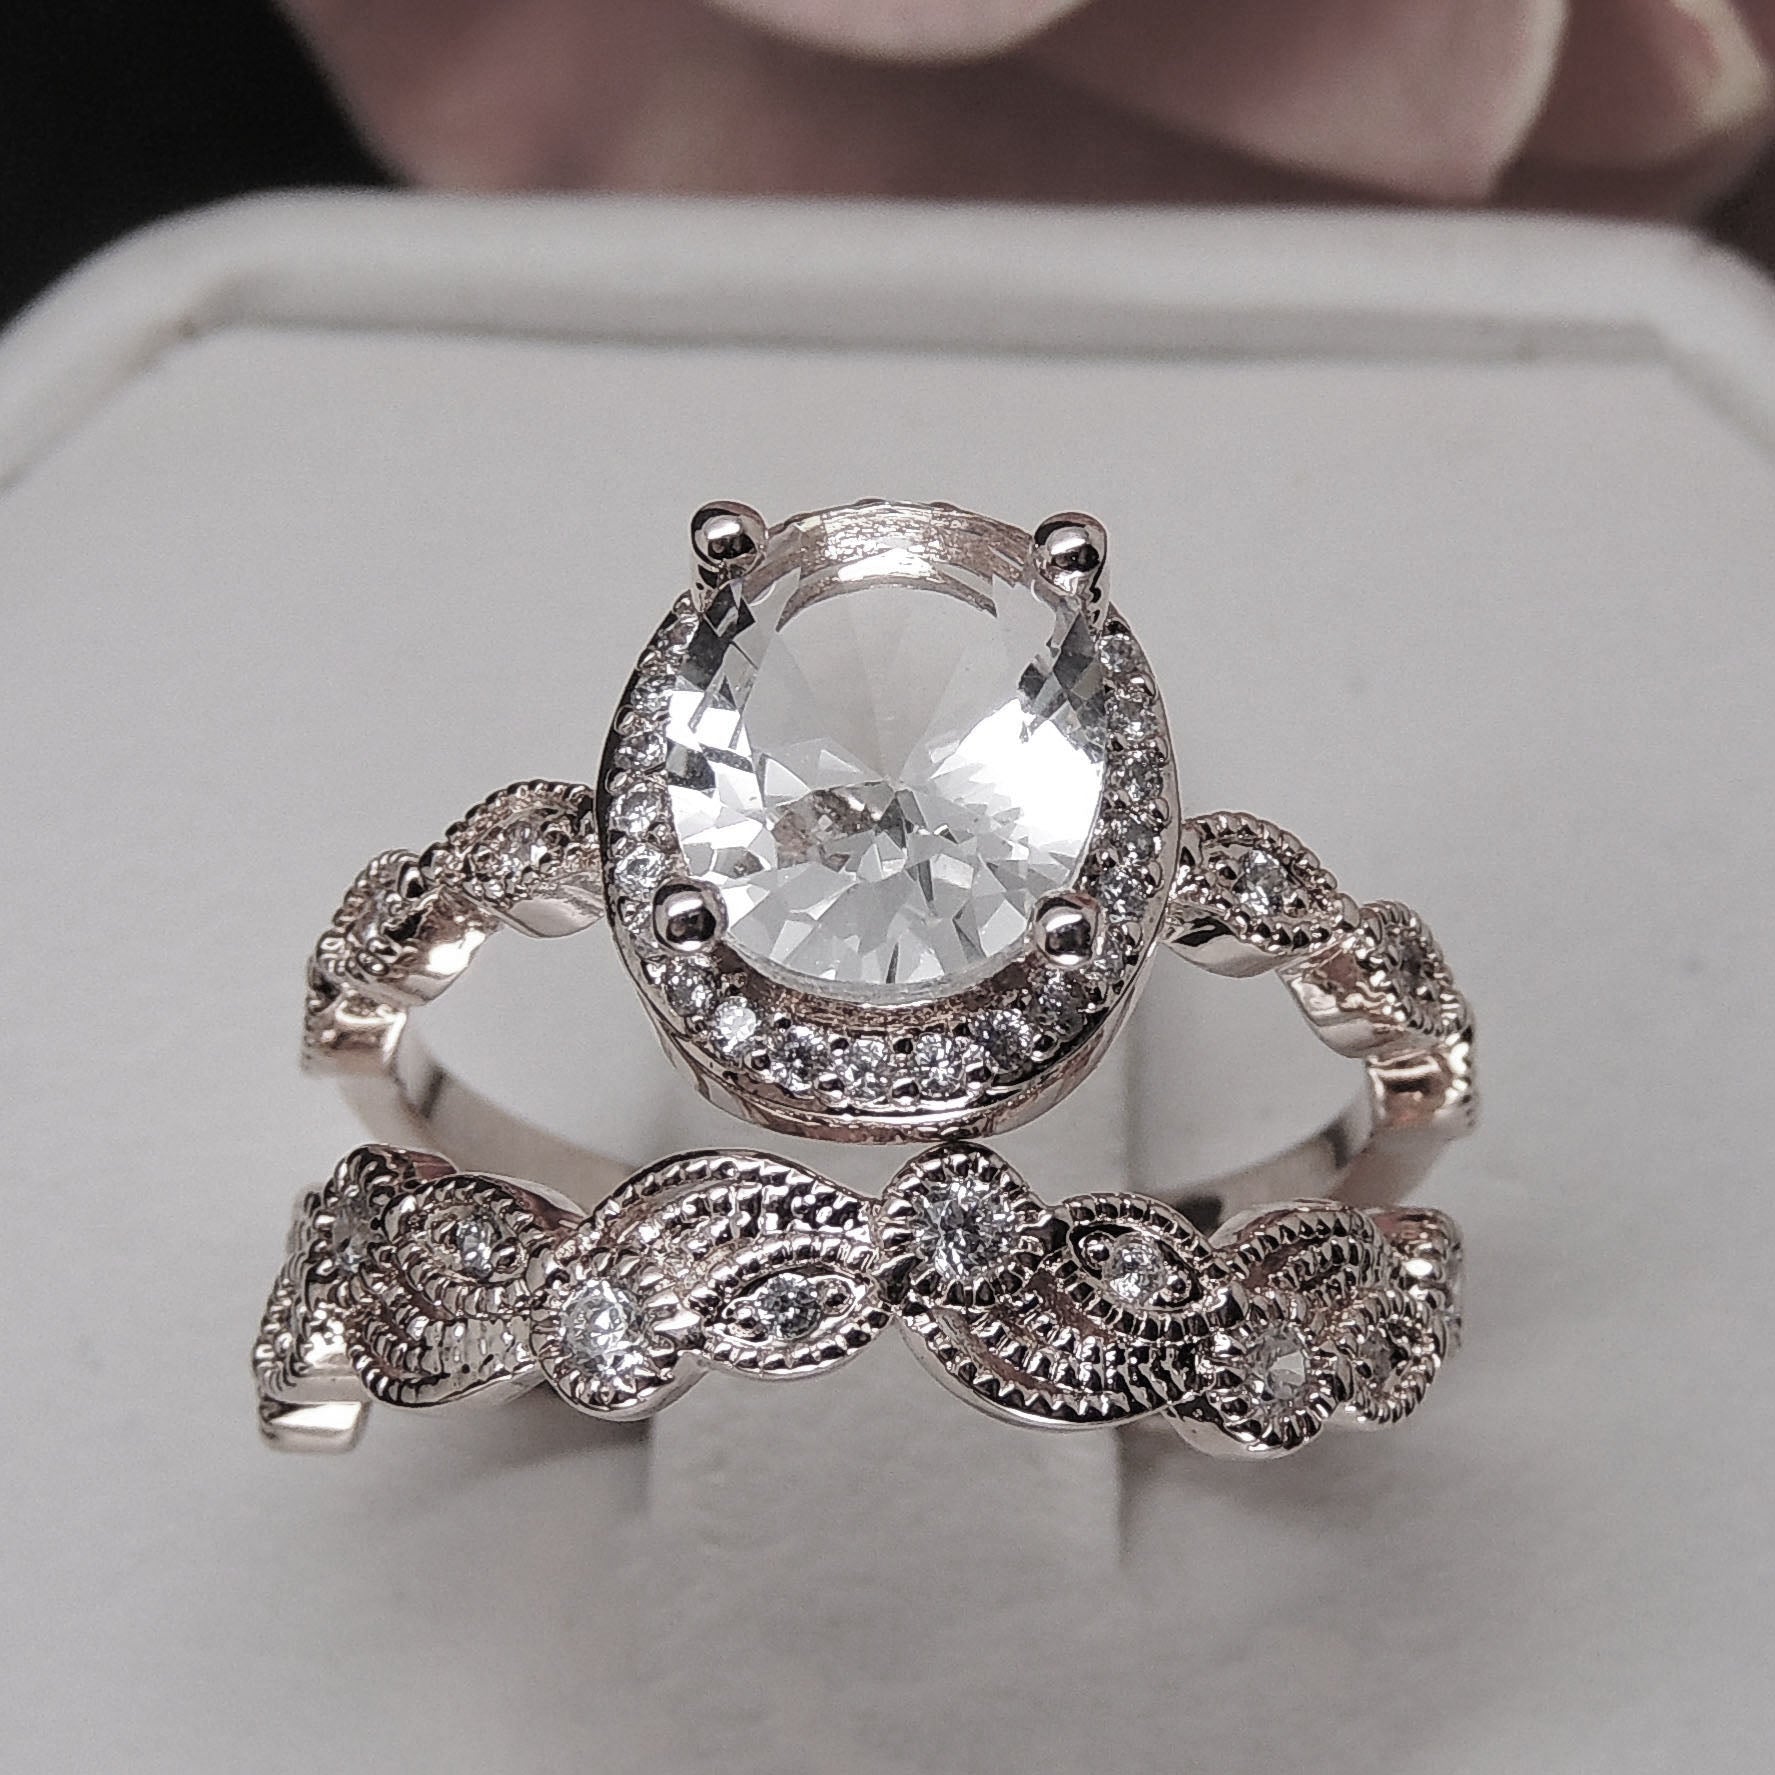 Amara Bridal Set Engagement Ring Wedding Band Cubic Zirconia Ginger Lyne Collection - Rose Gold,10